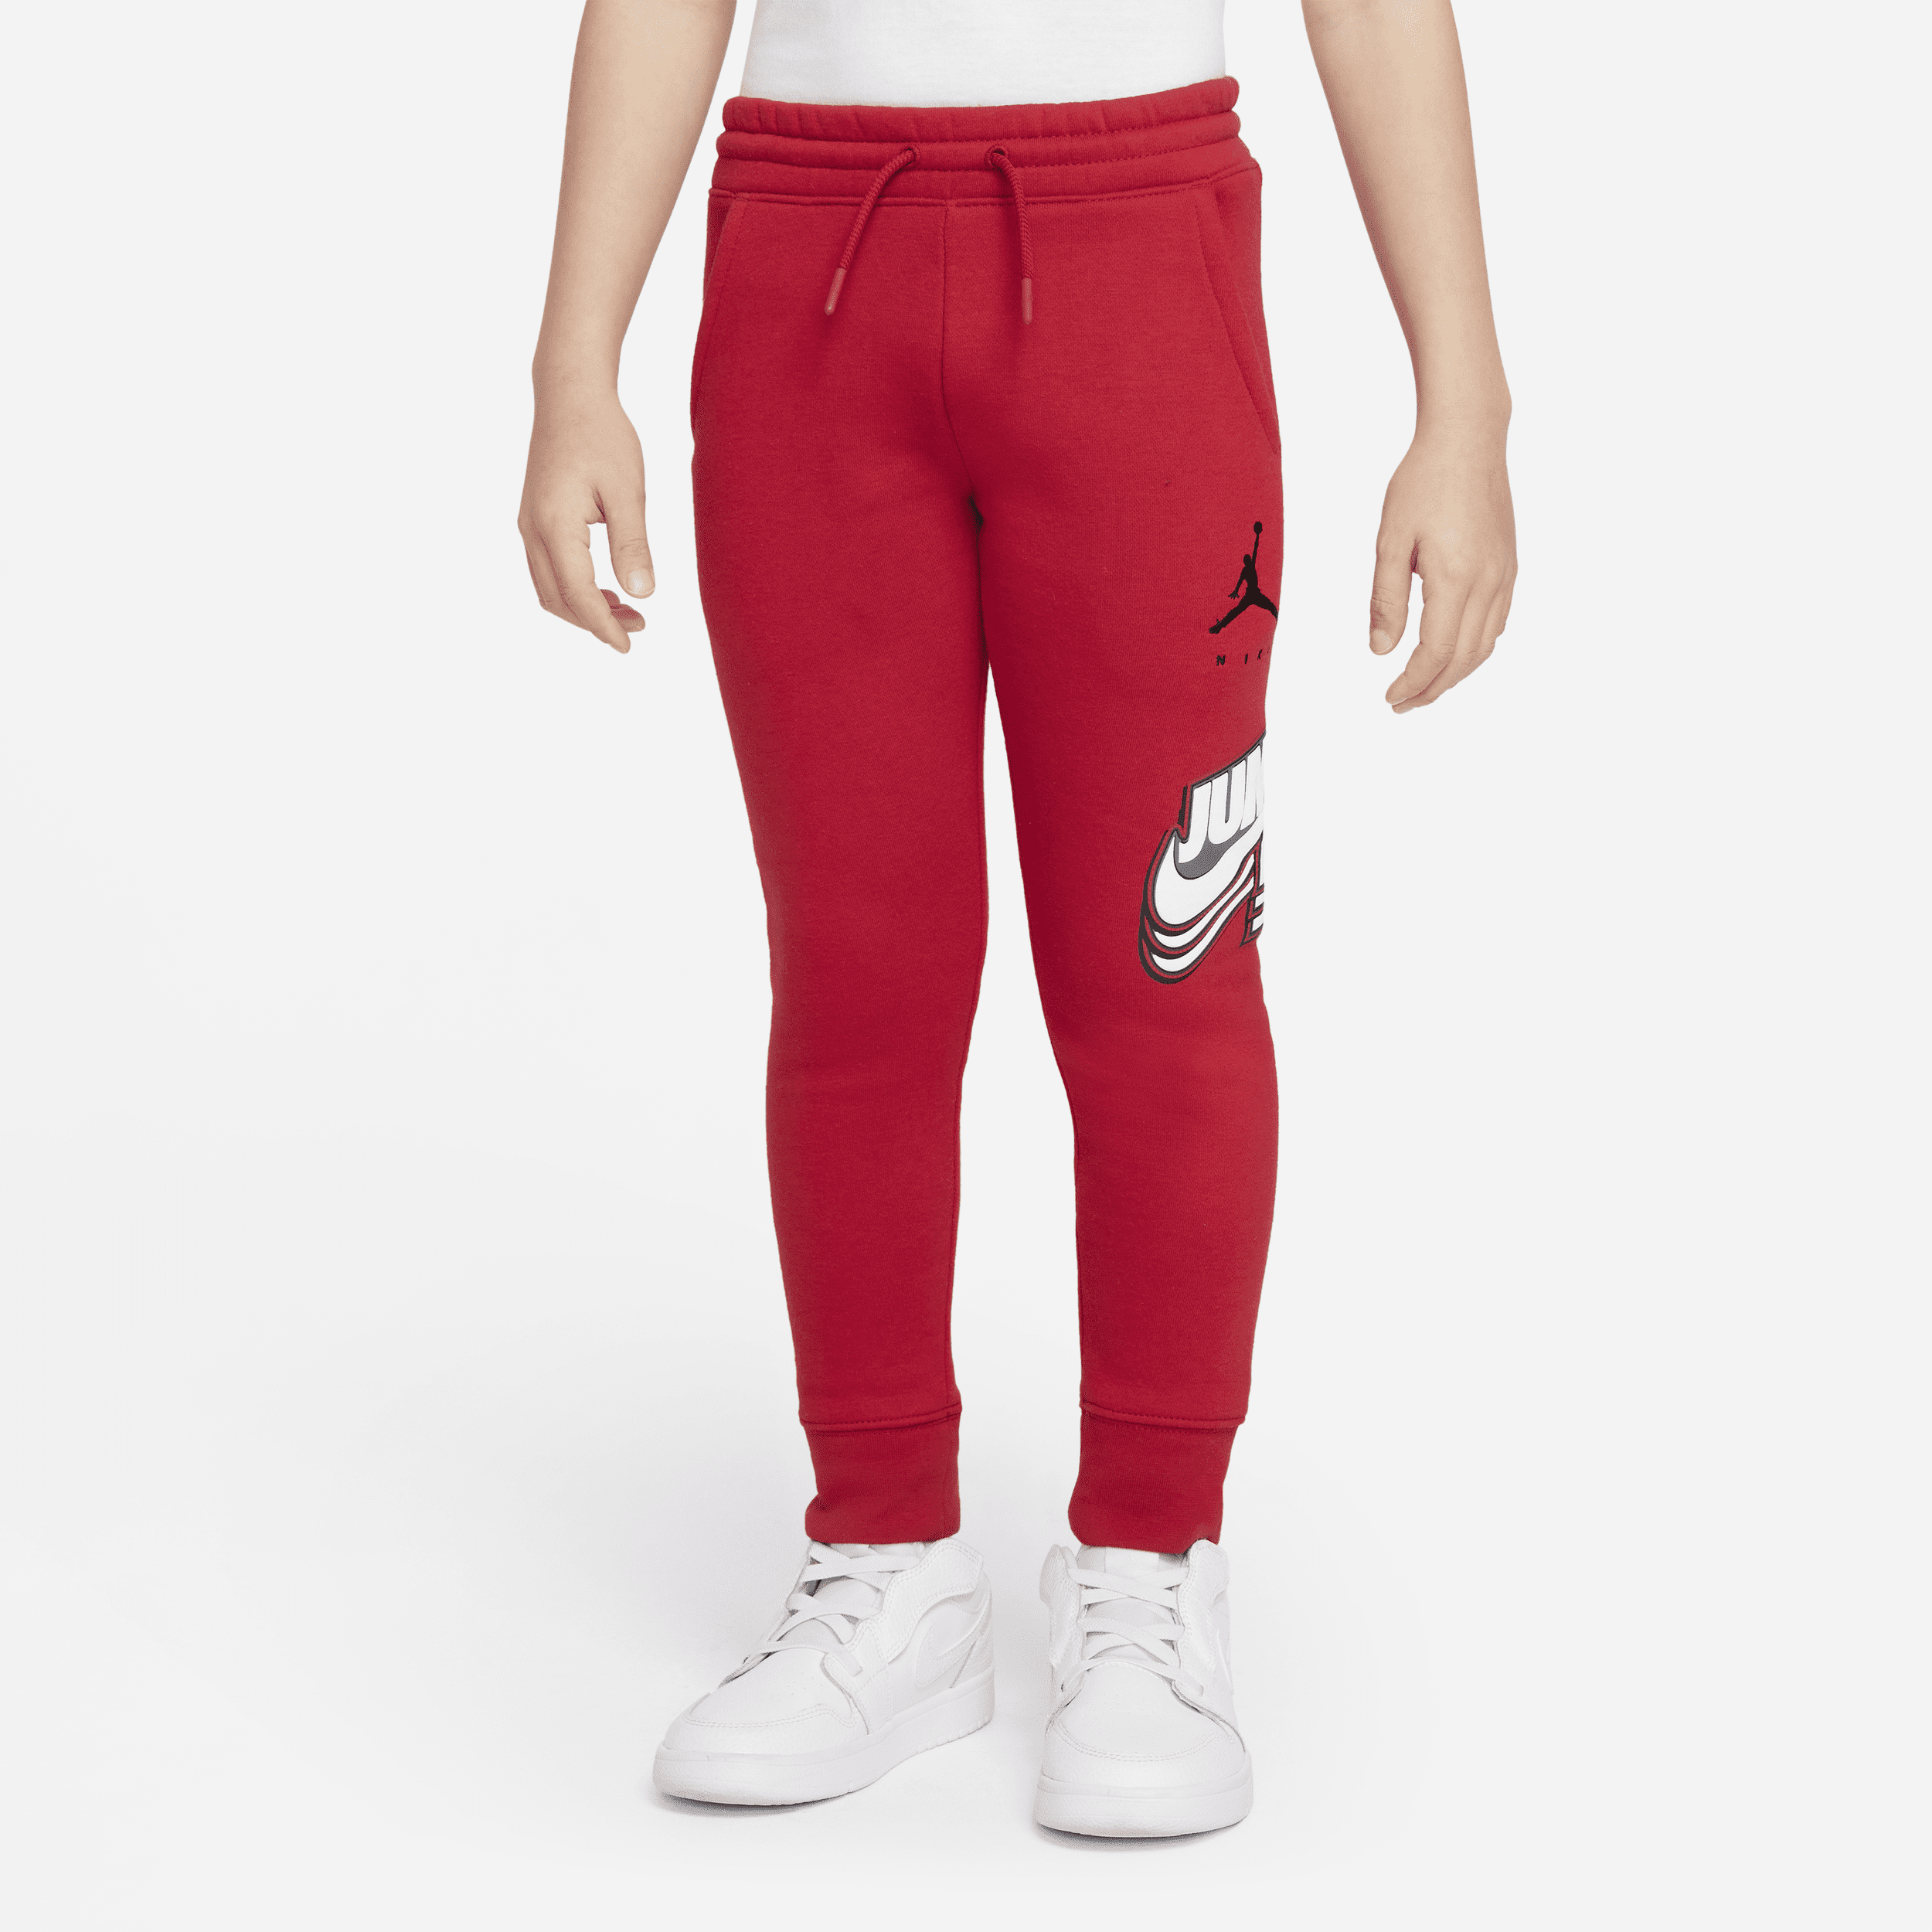 Jordan-bukser til mindre børn - rød